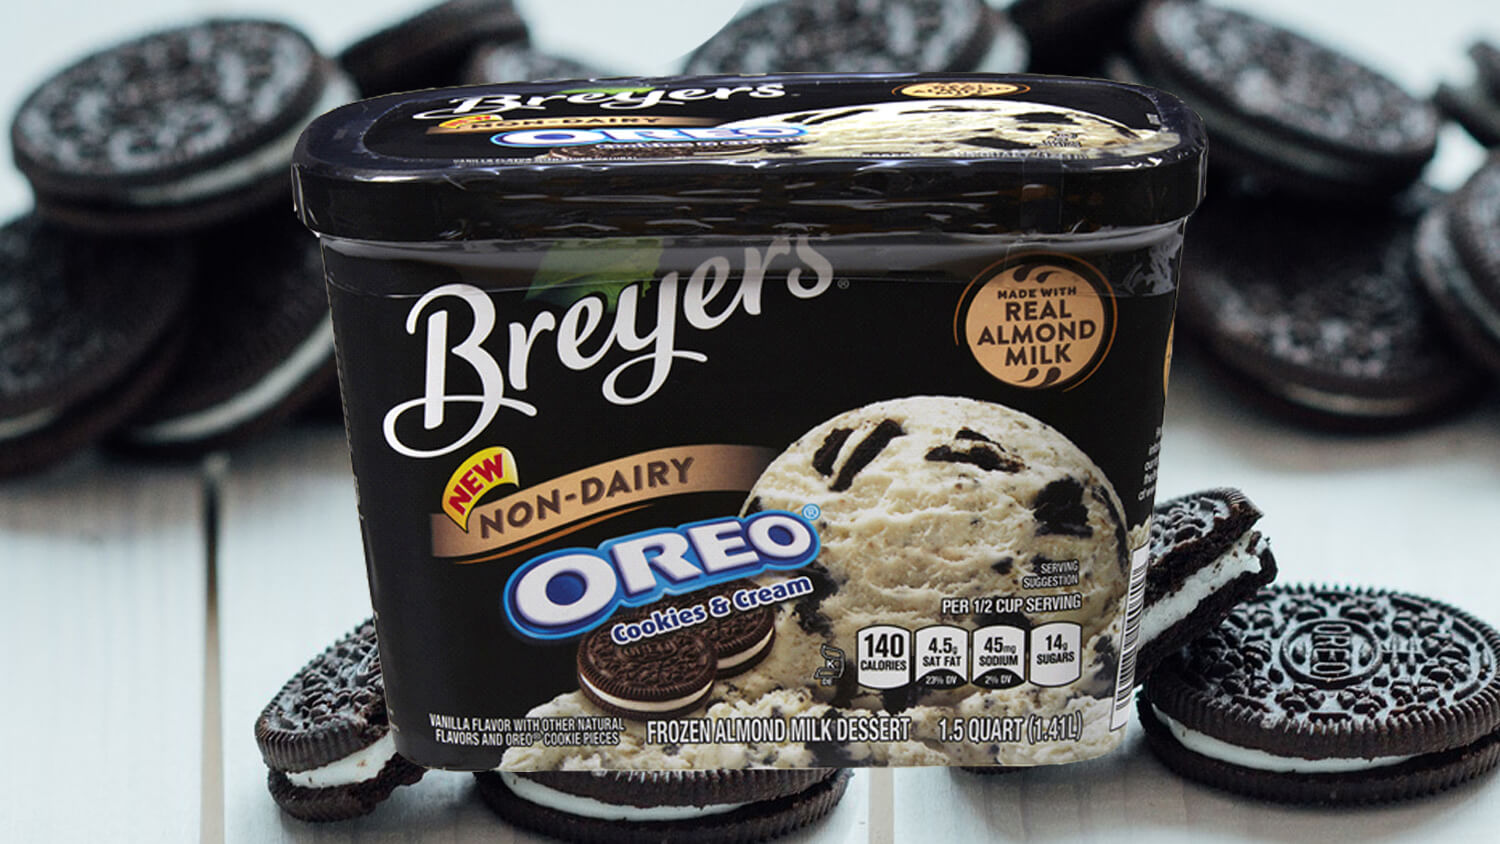 Low-Calorie Ice Cream Brand Breyers Delights to Launch Vegan Range in the UK